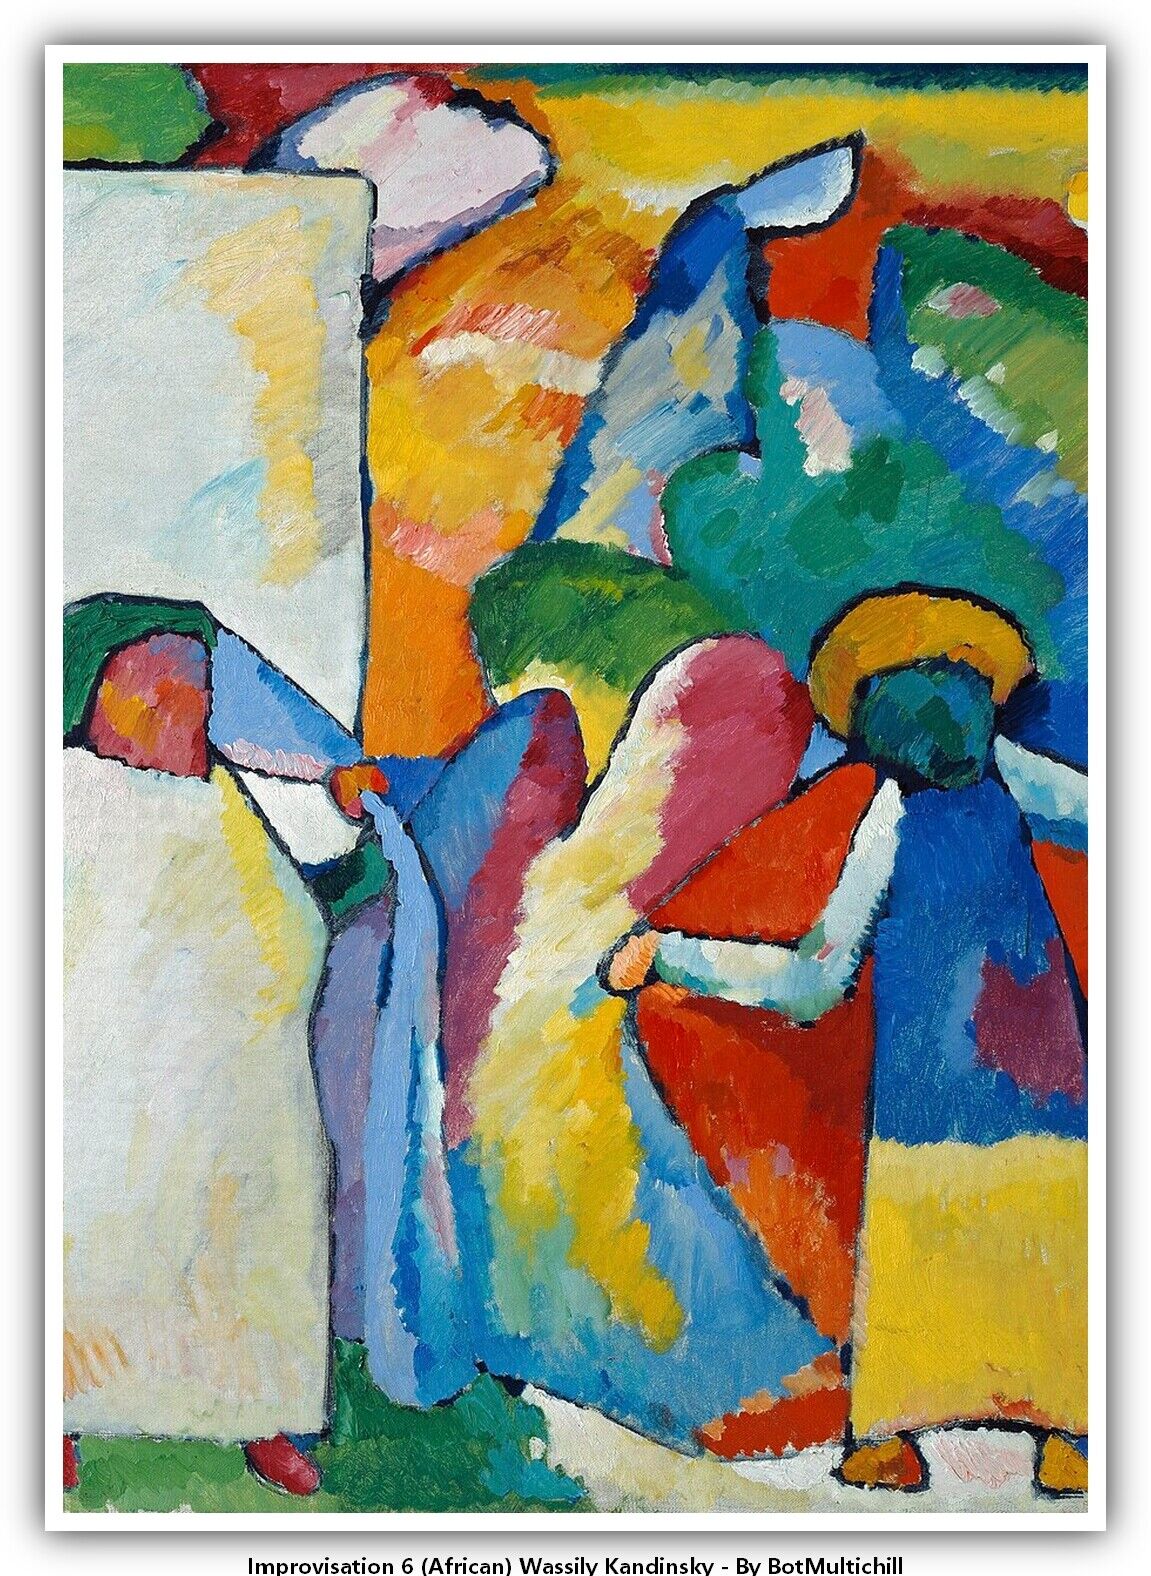 Improvisation 6 (African) Wassily Kandinsky